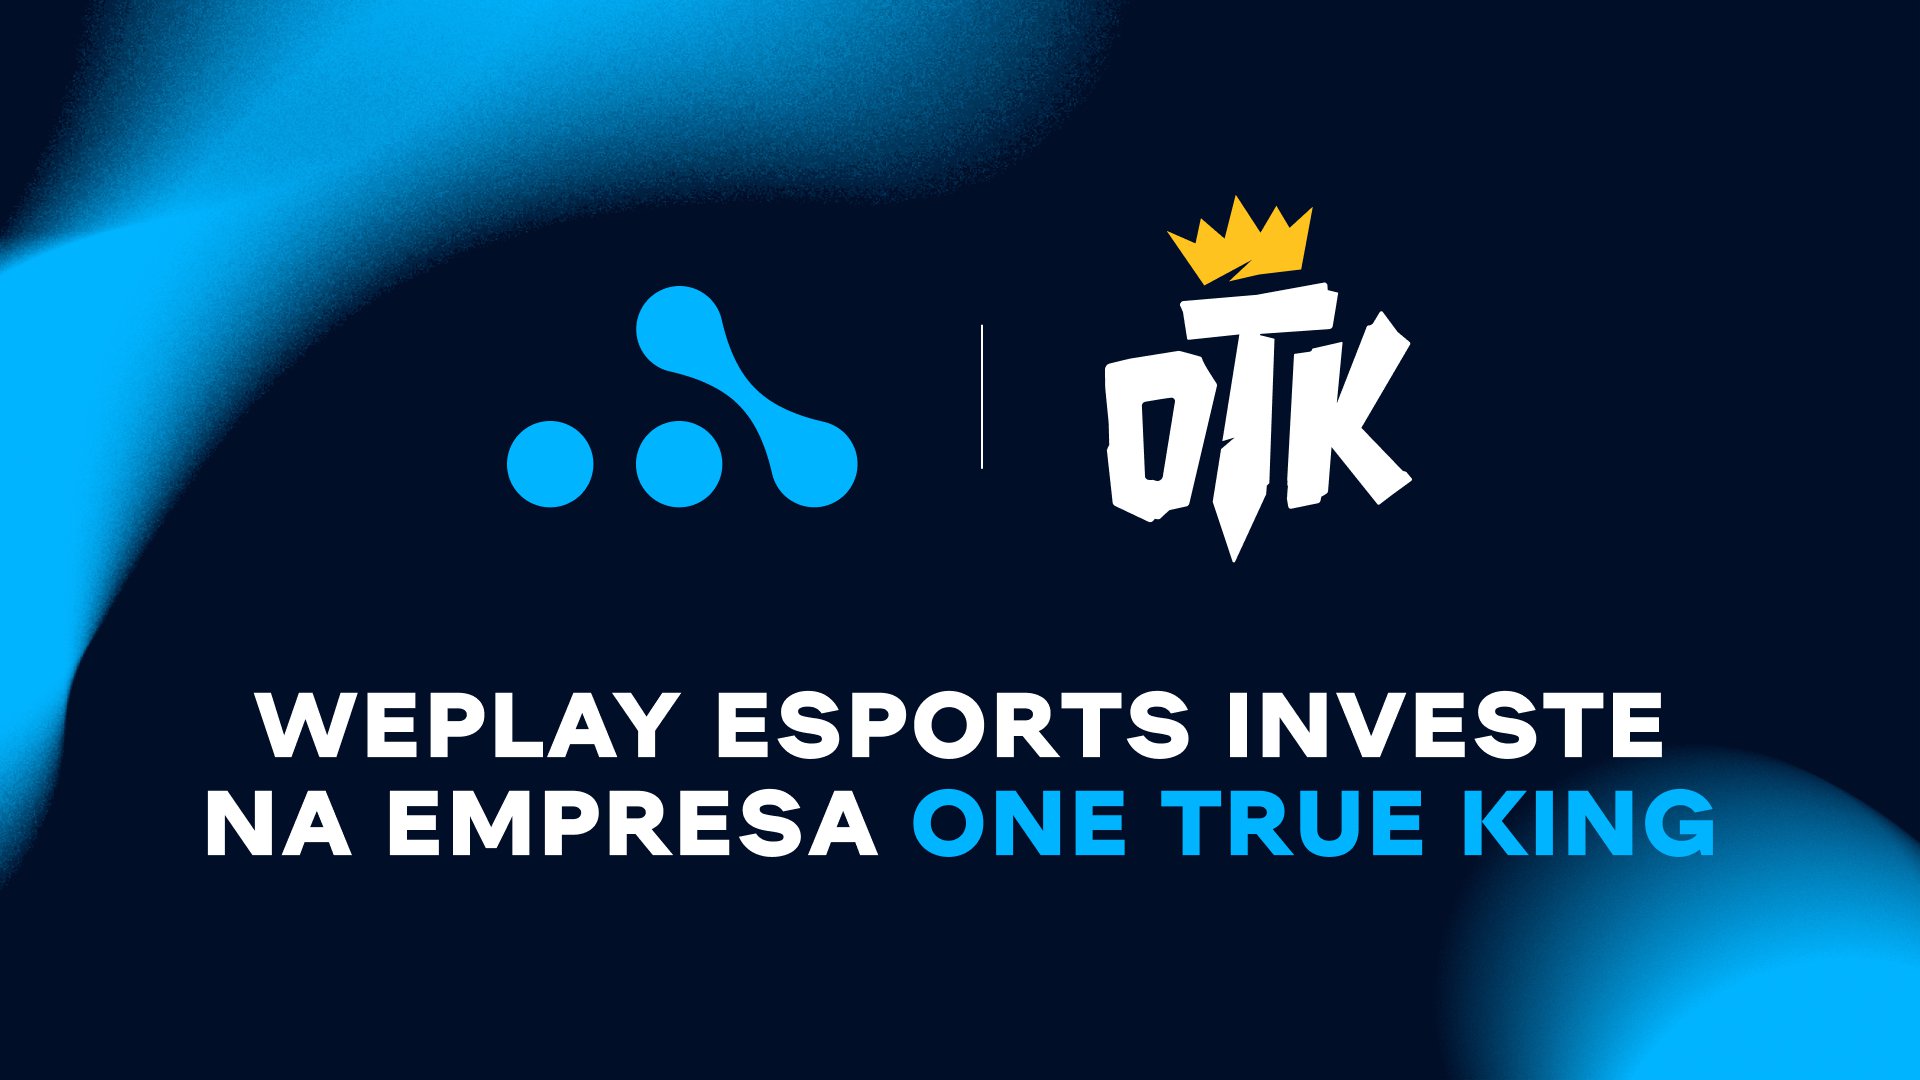 WePlay Esports investe na empresa One True King. Imagem: WePlay Holding